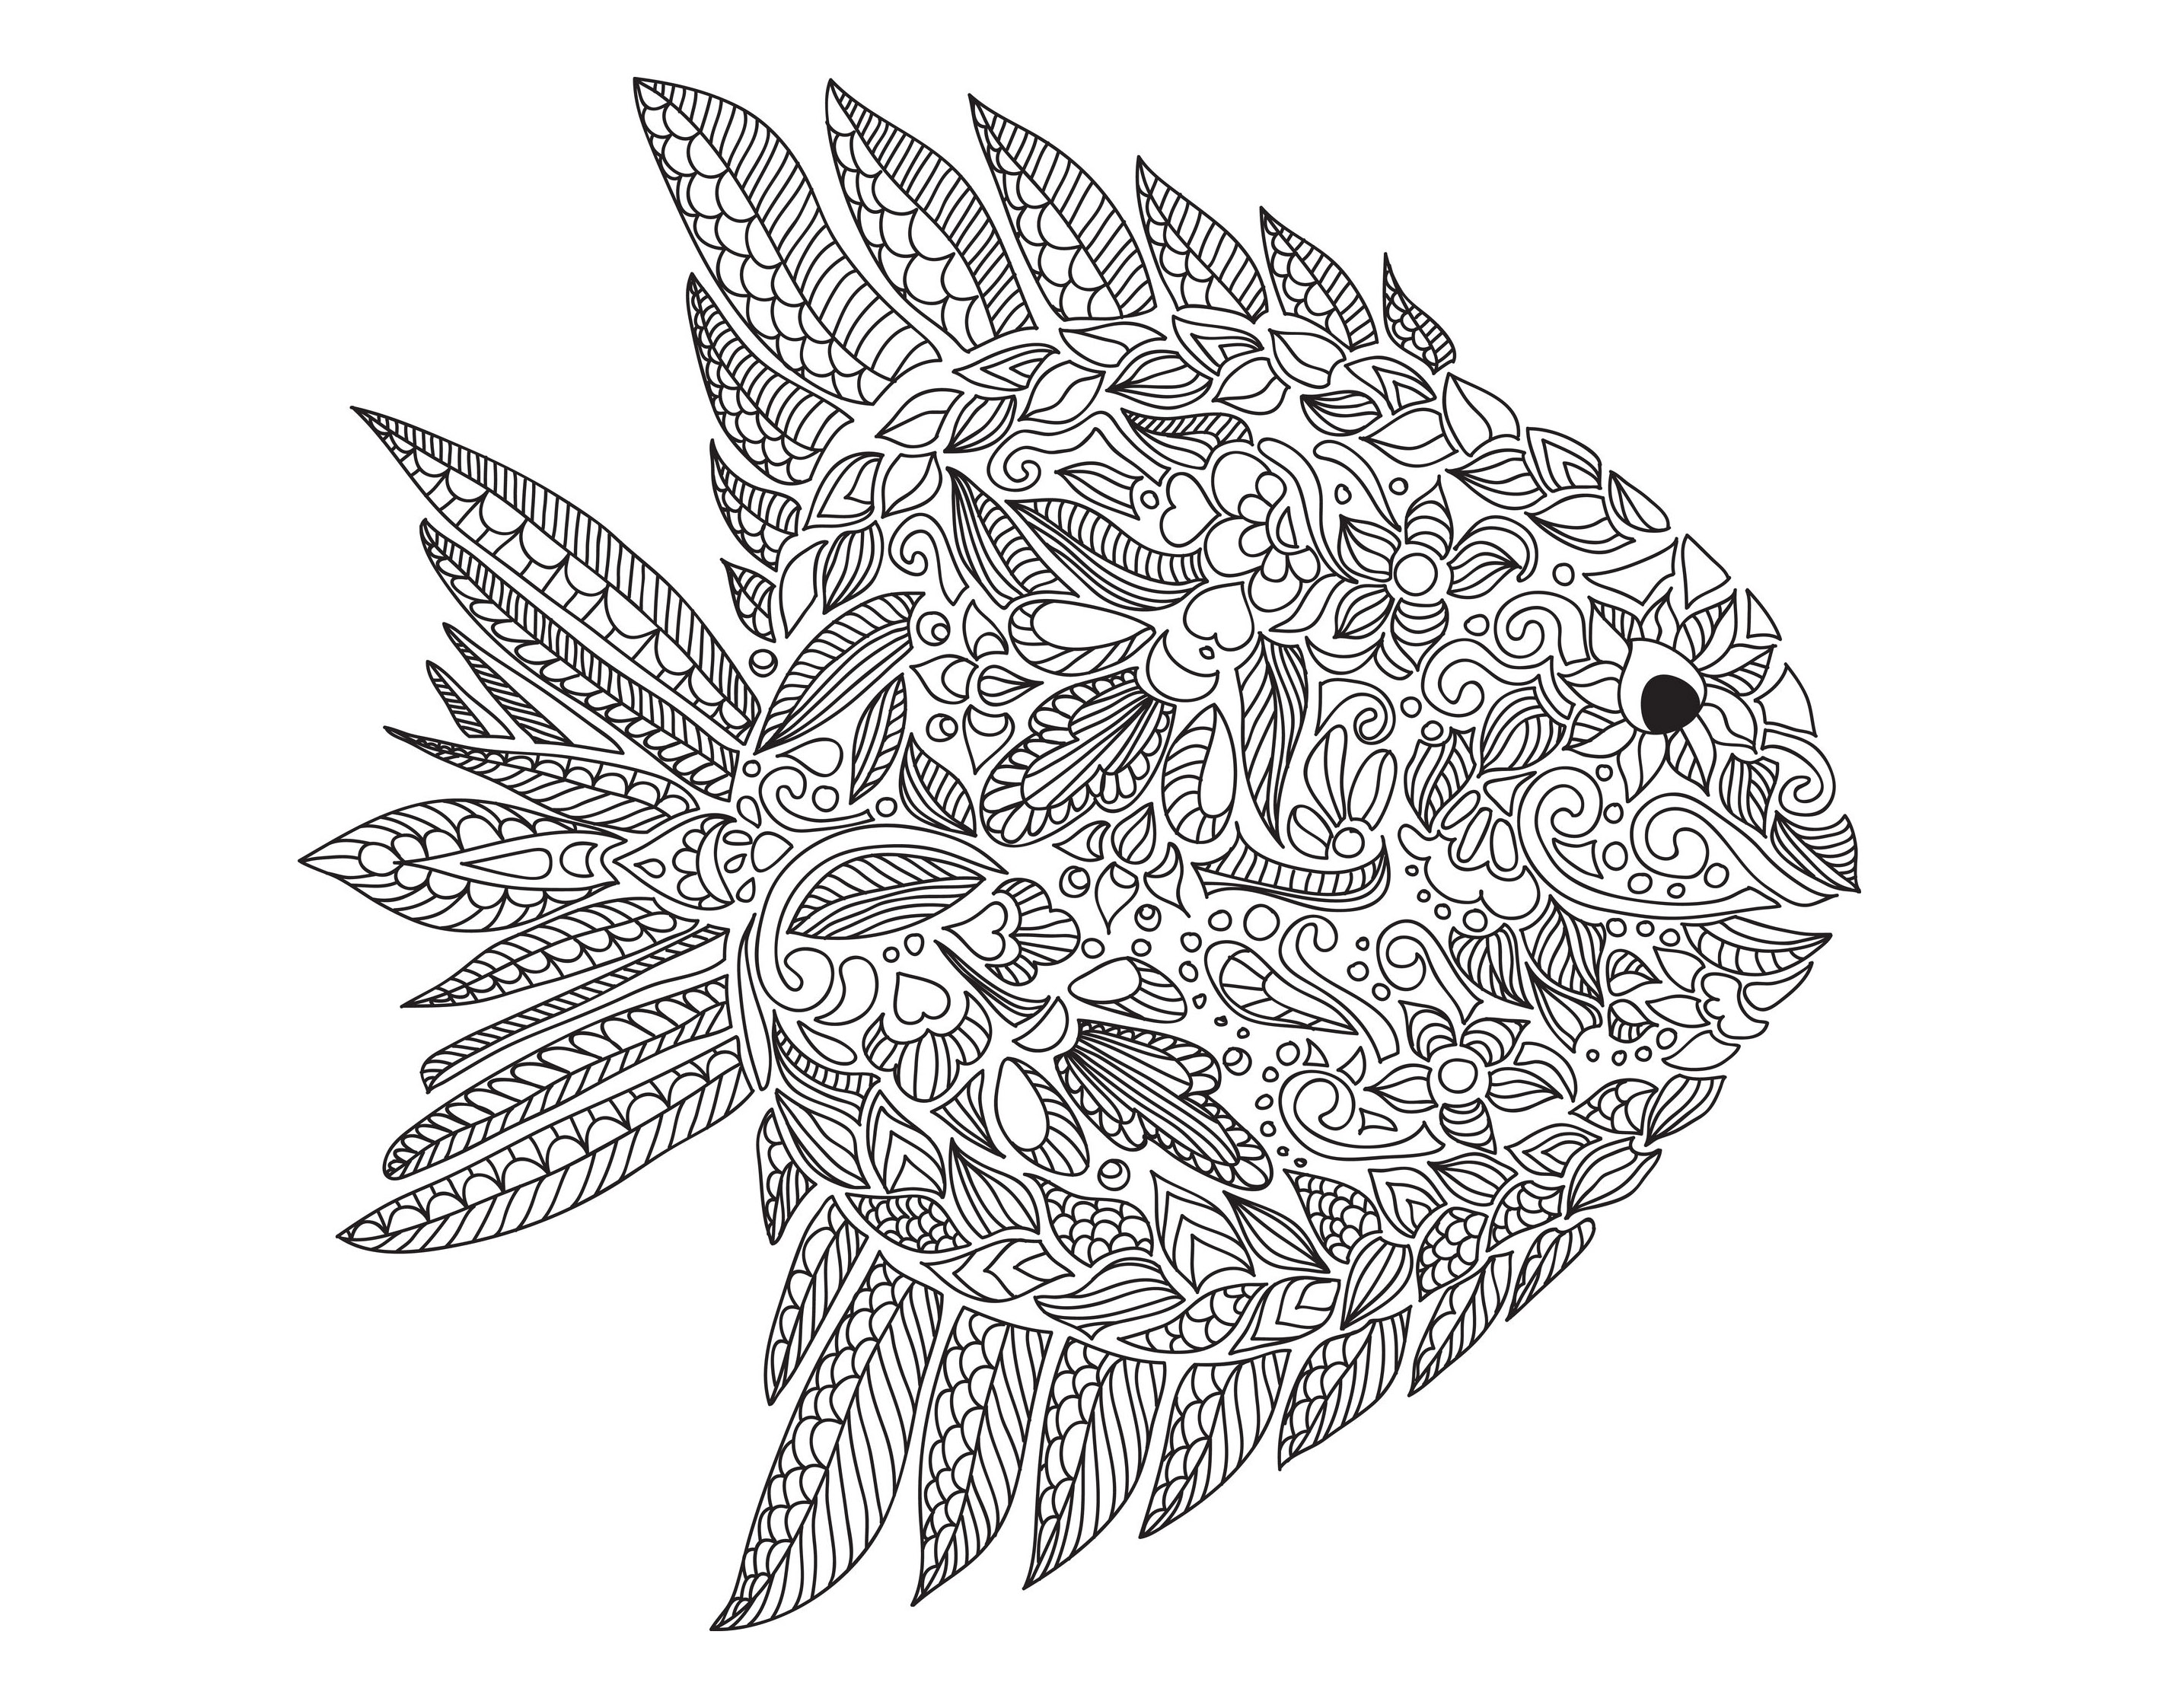 Zentangle fish drawn with various patterns, by Artnatalia, Artist : artnatalia   Source : 123rf